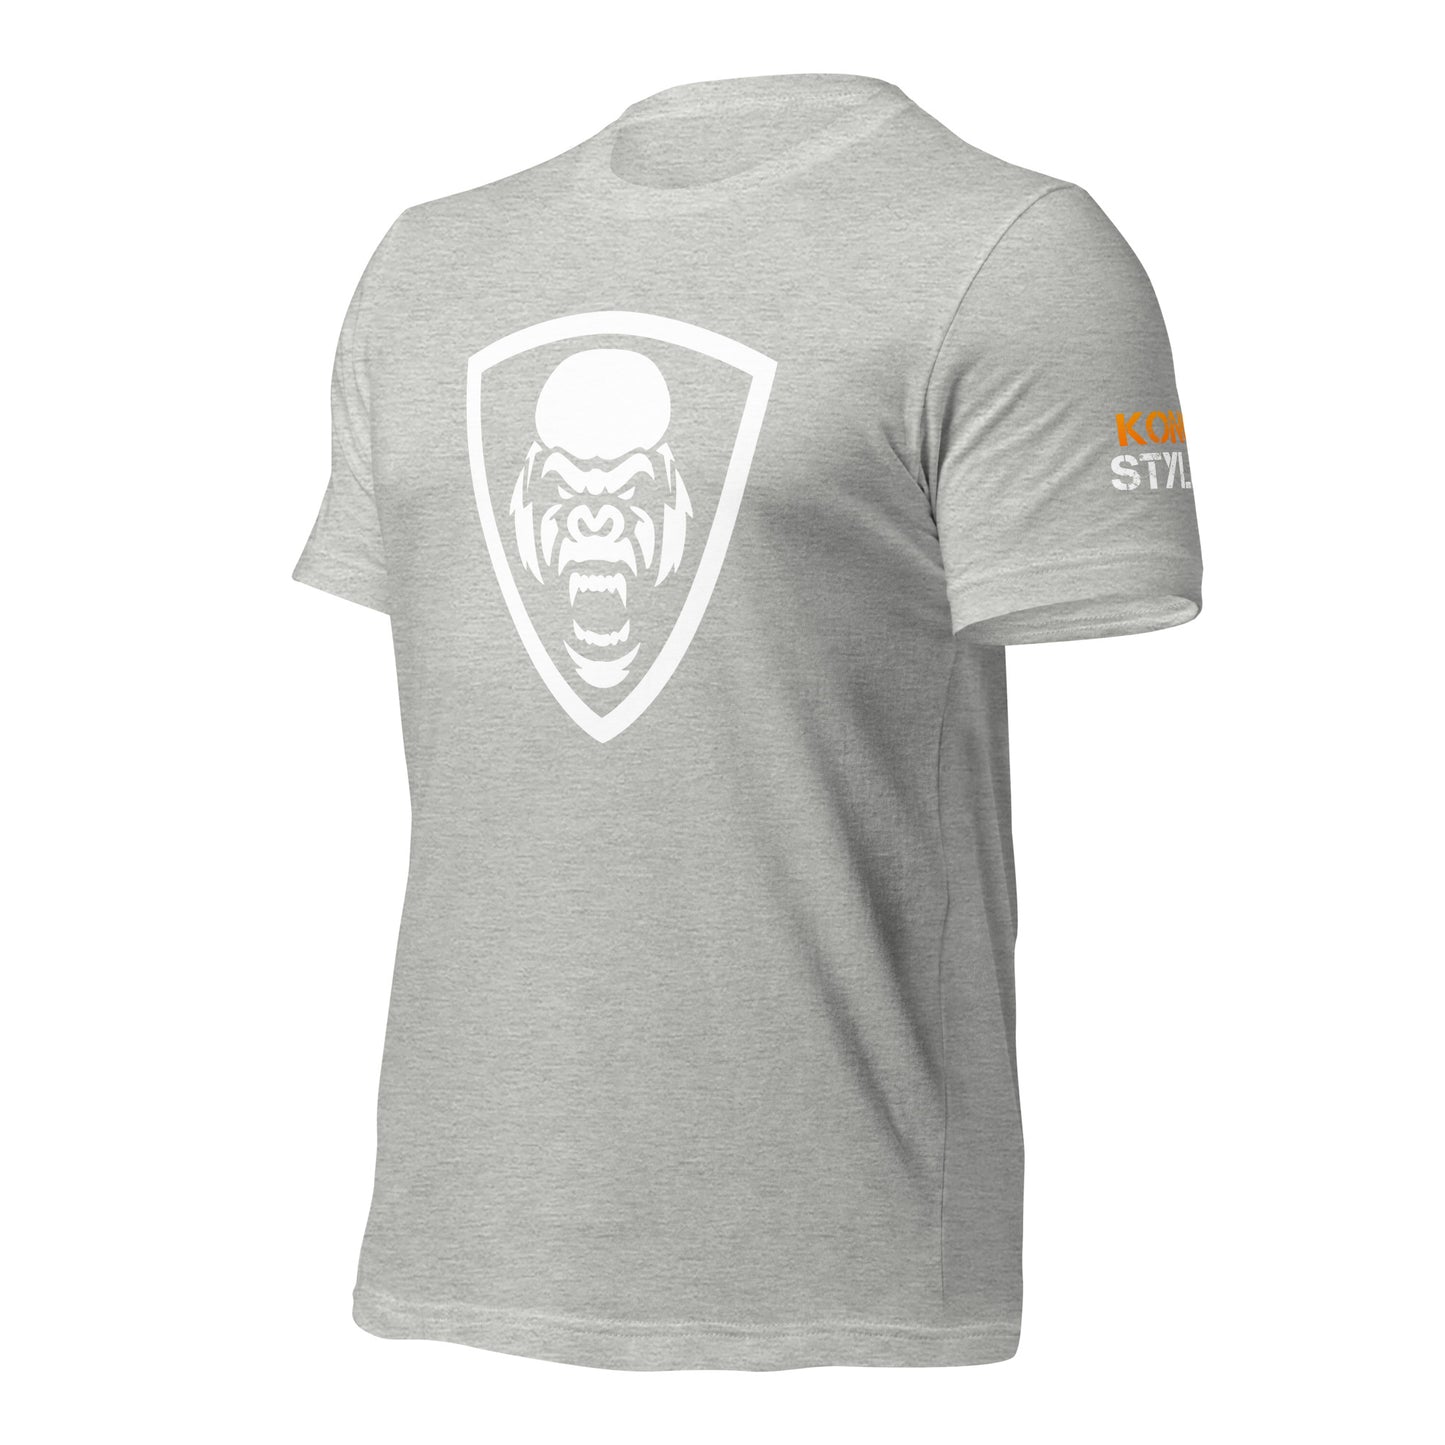 White Kong Shield Unisex t-shirt